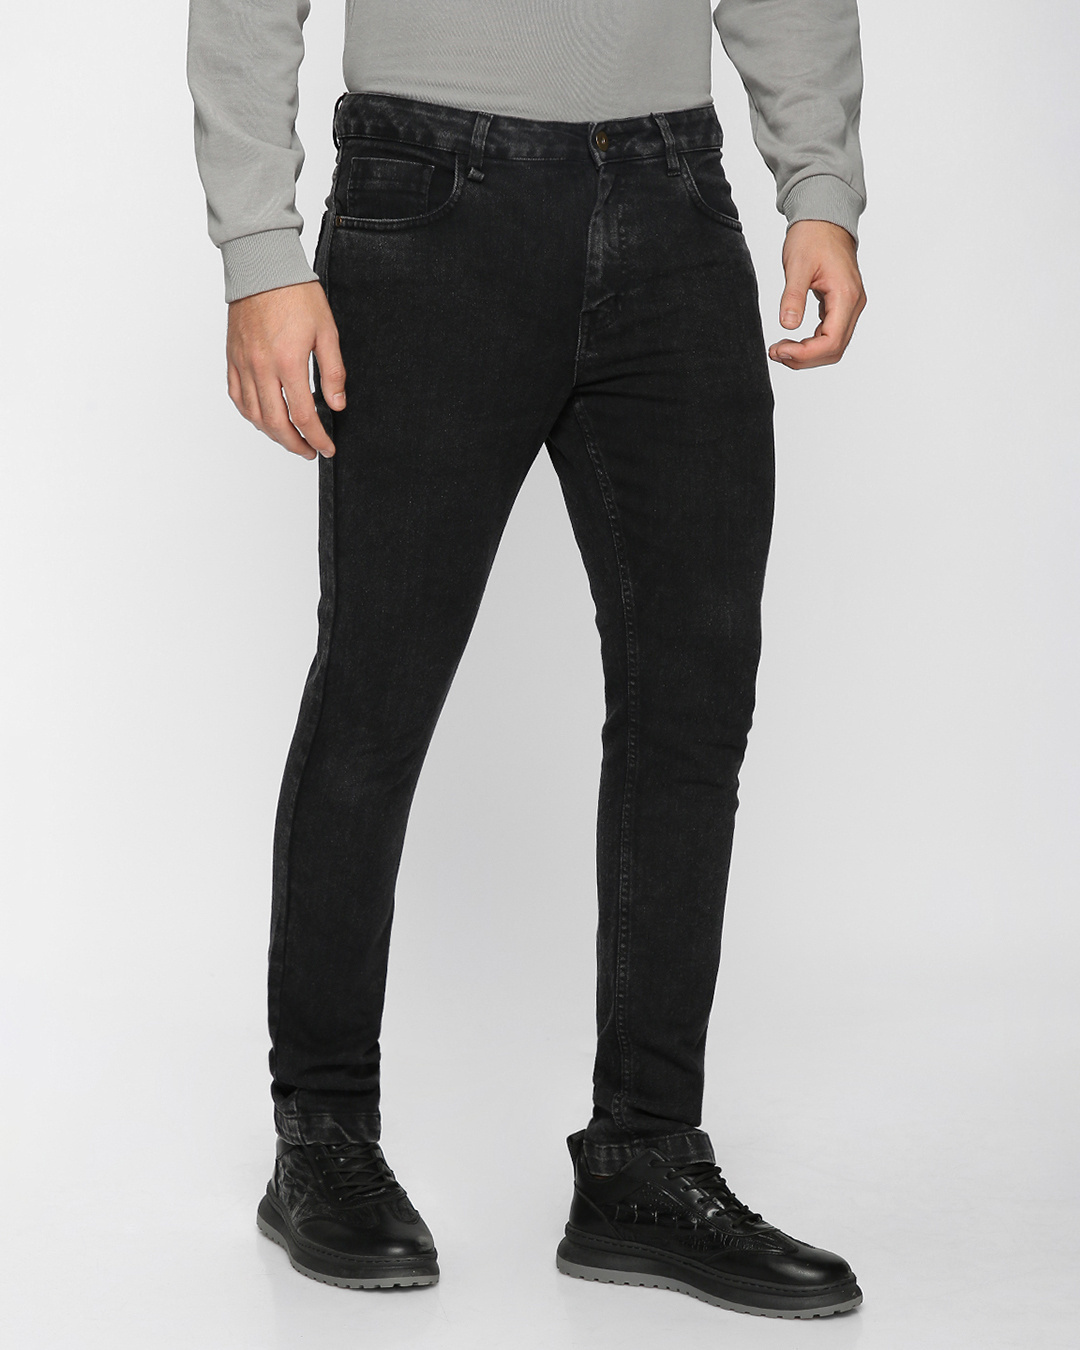 Buy Men's Black Denim Jeans Online at Bewakoof